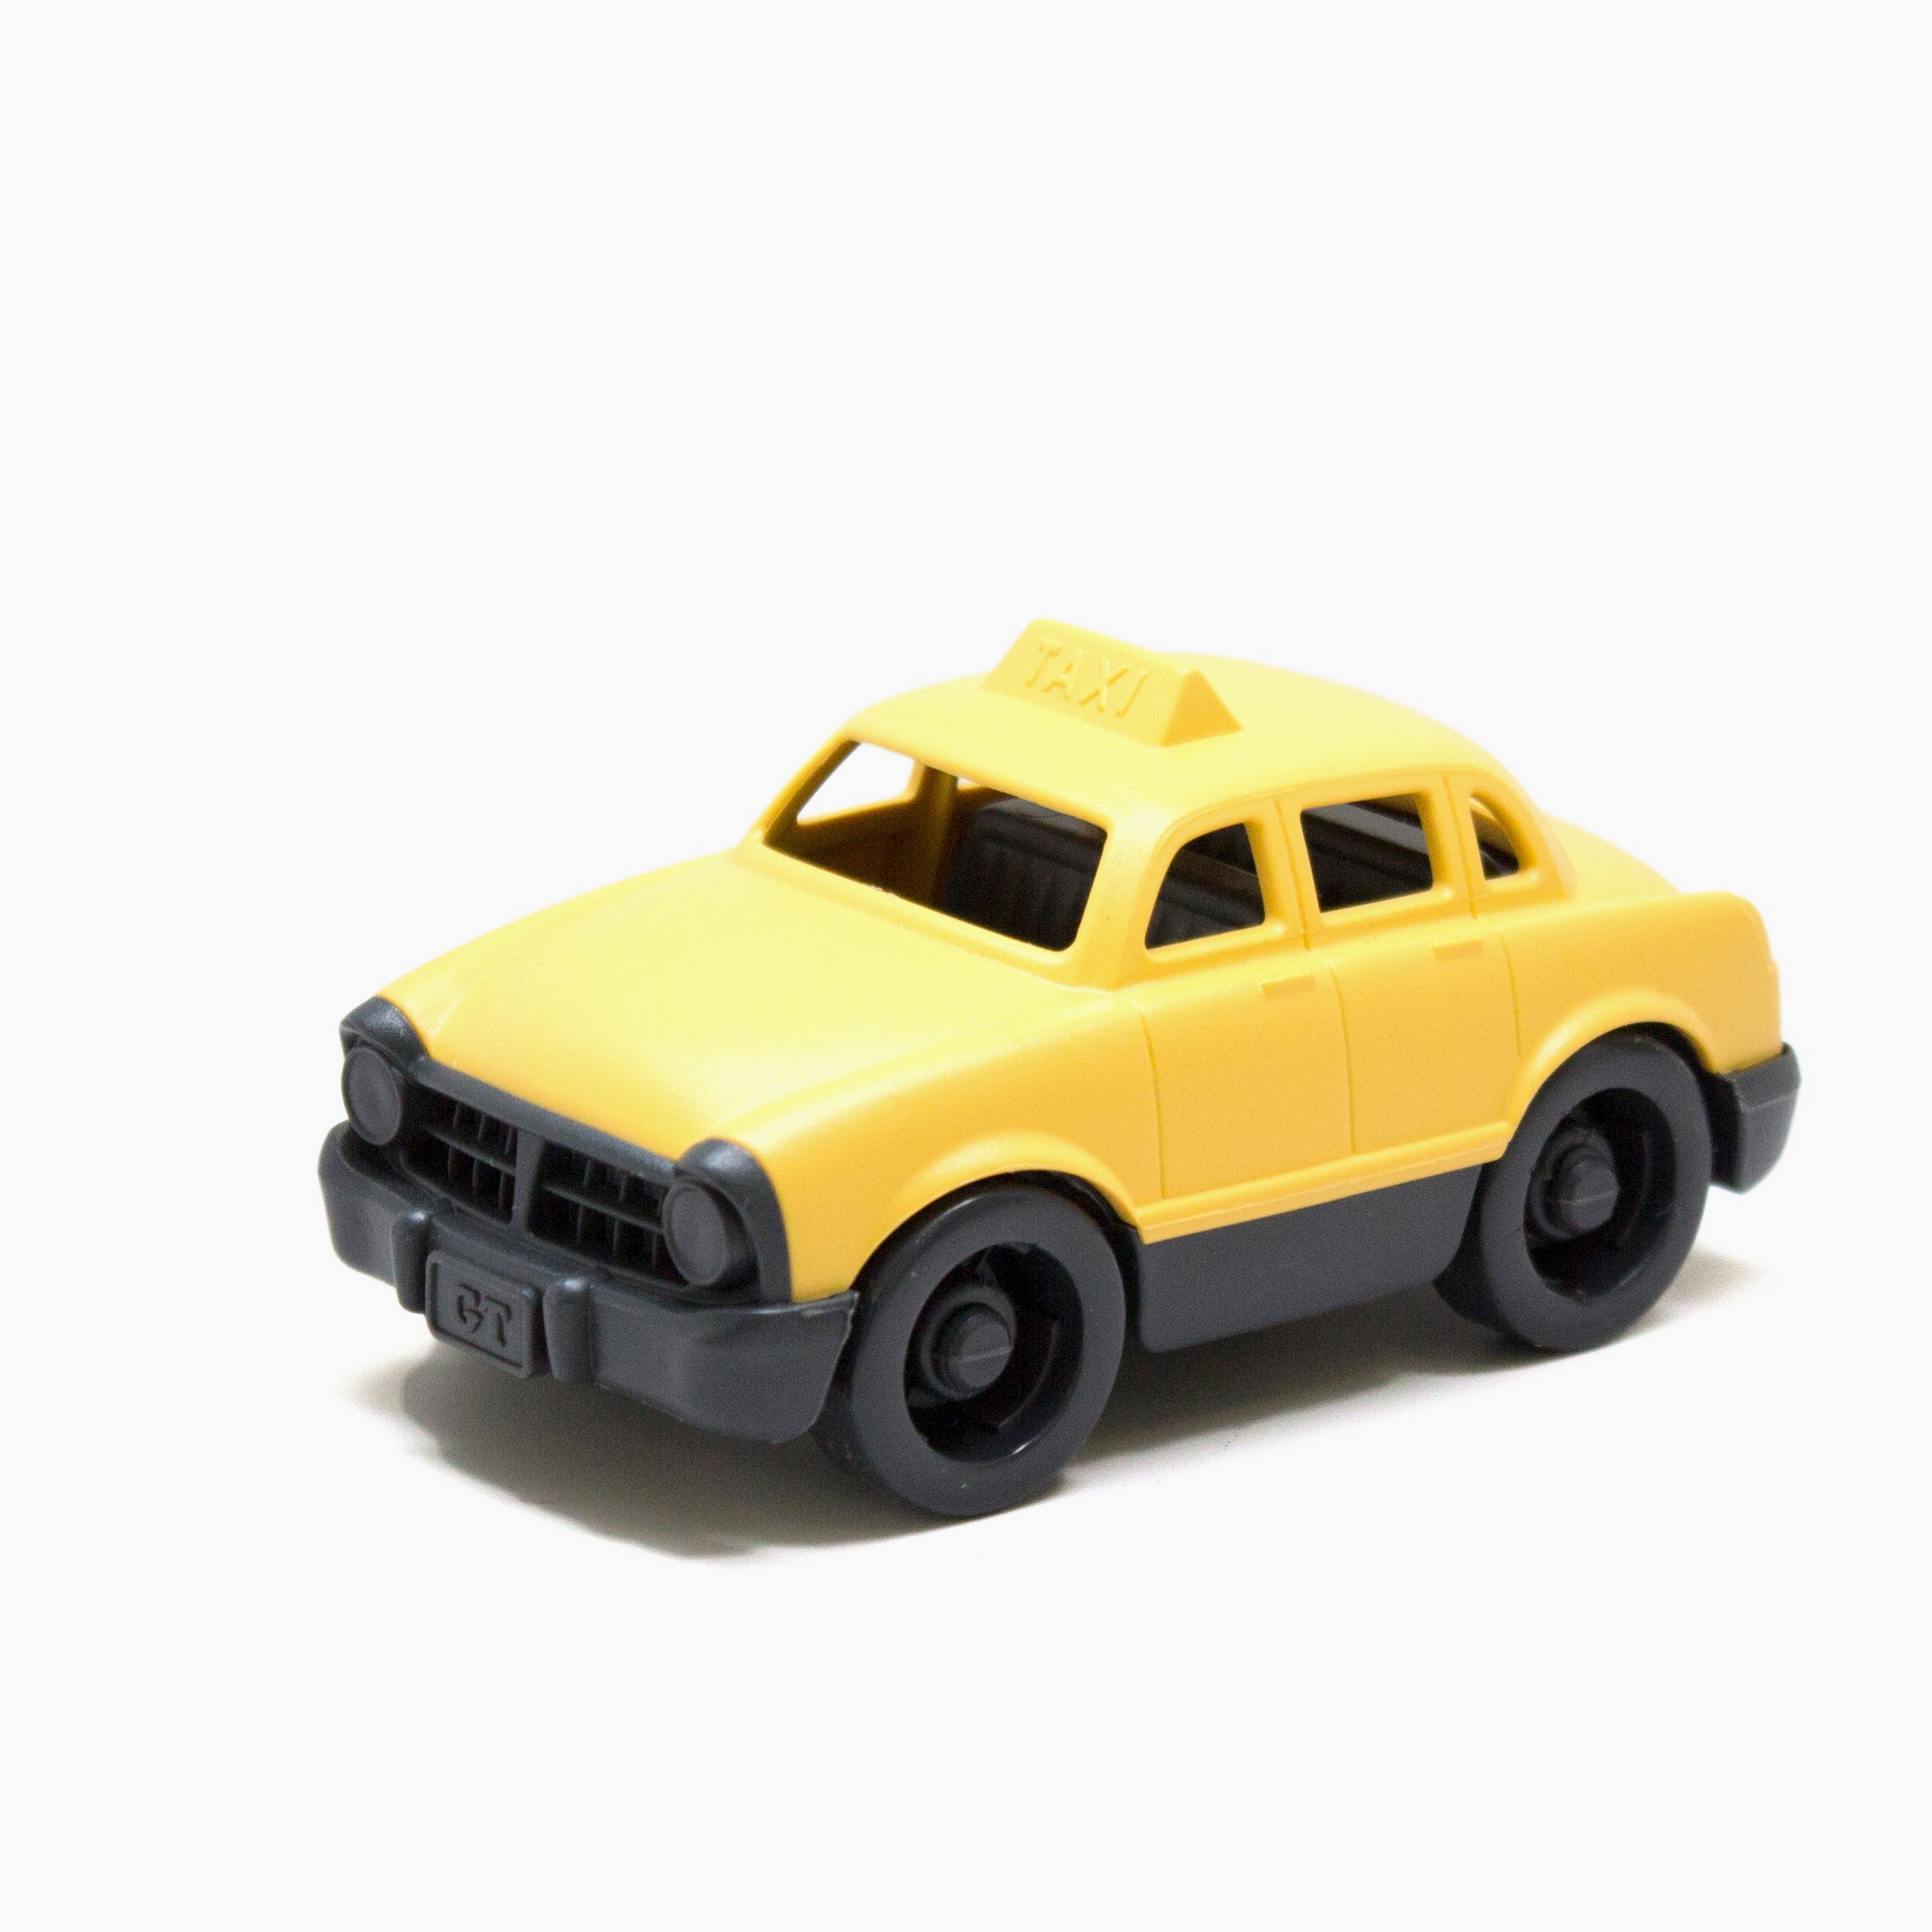 Mini Vehicle Set